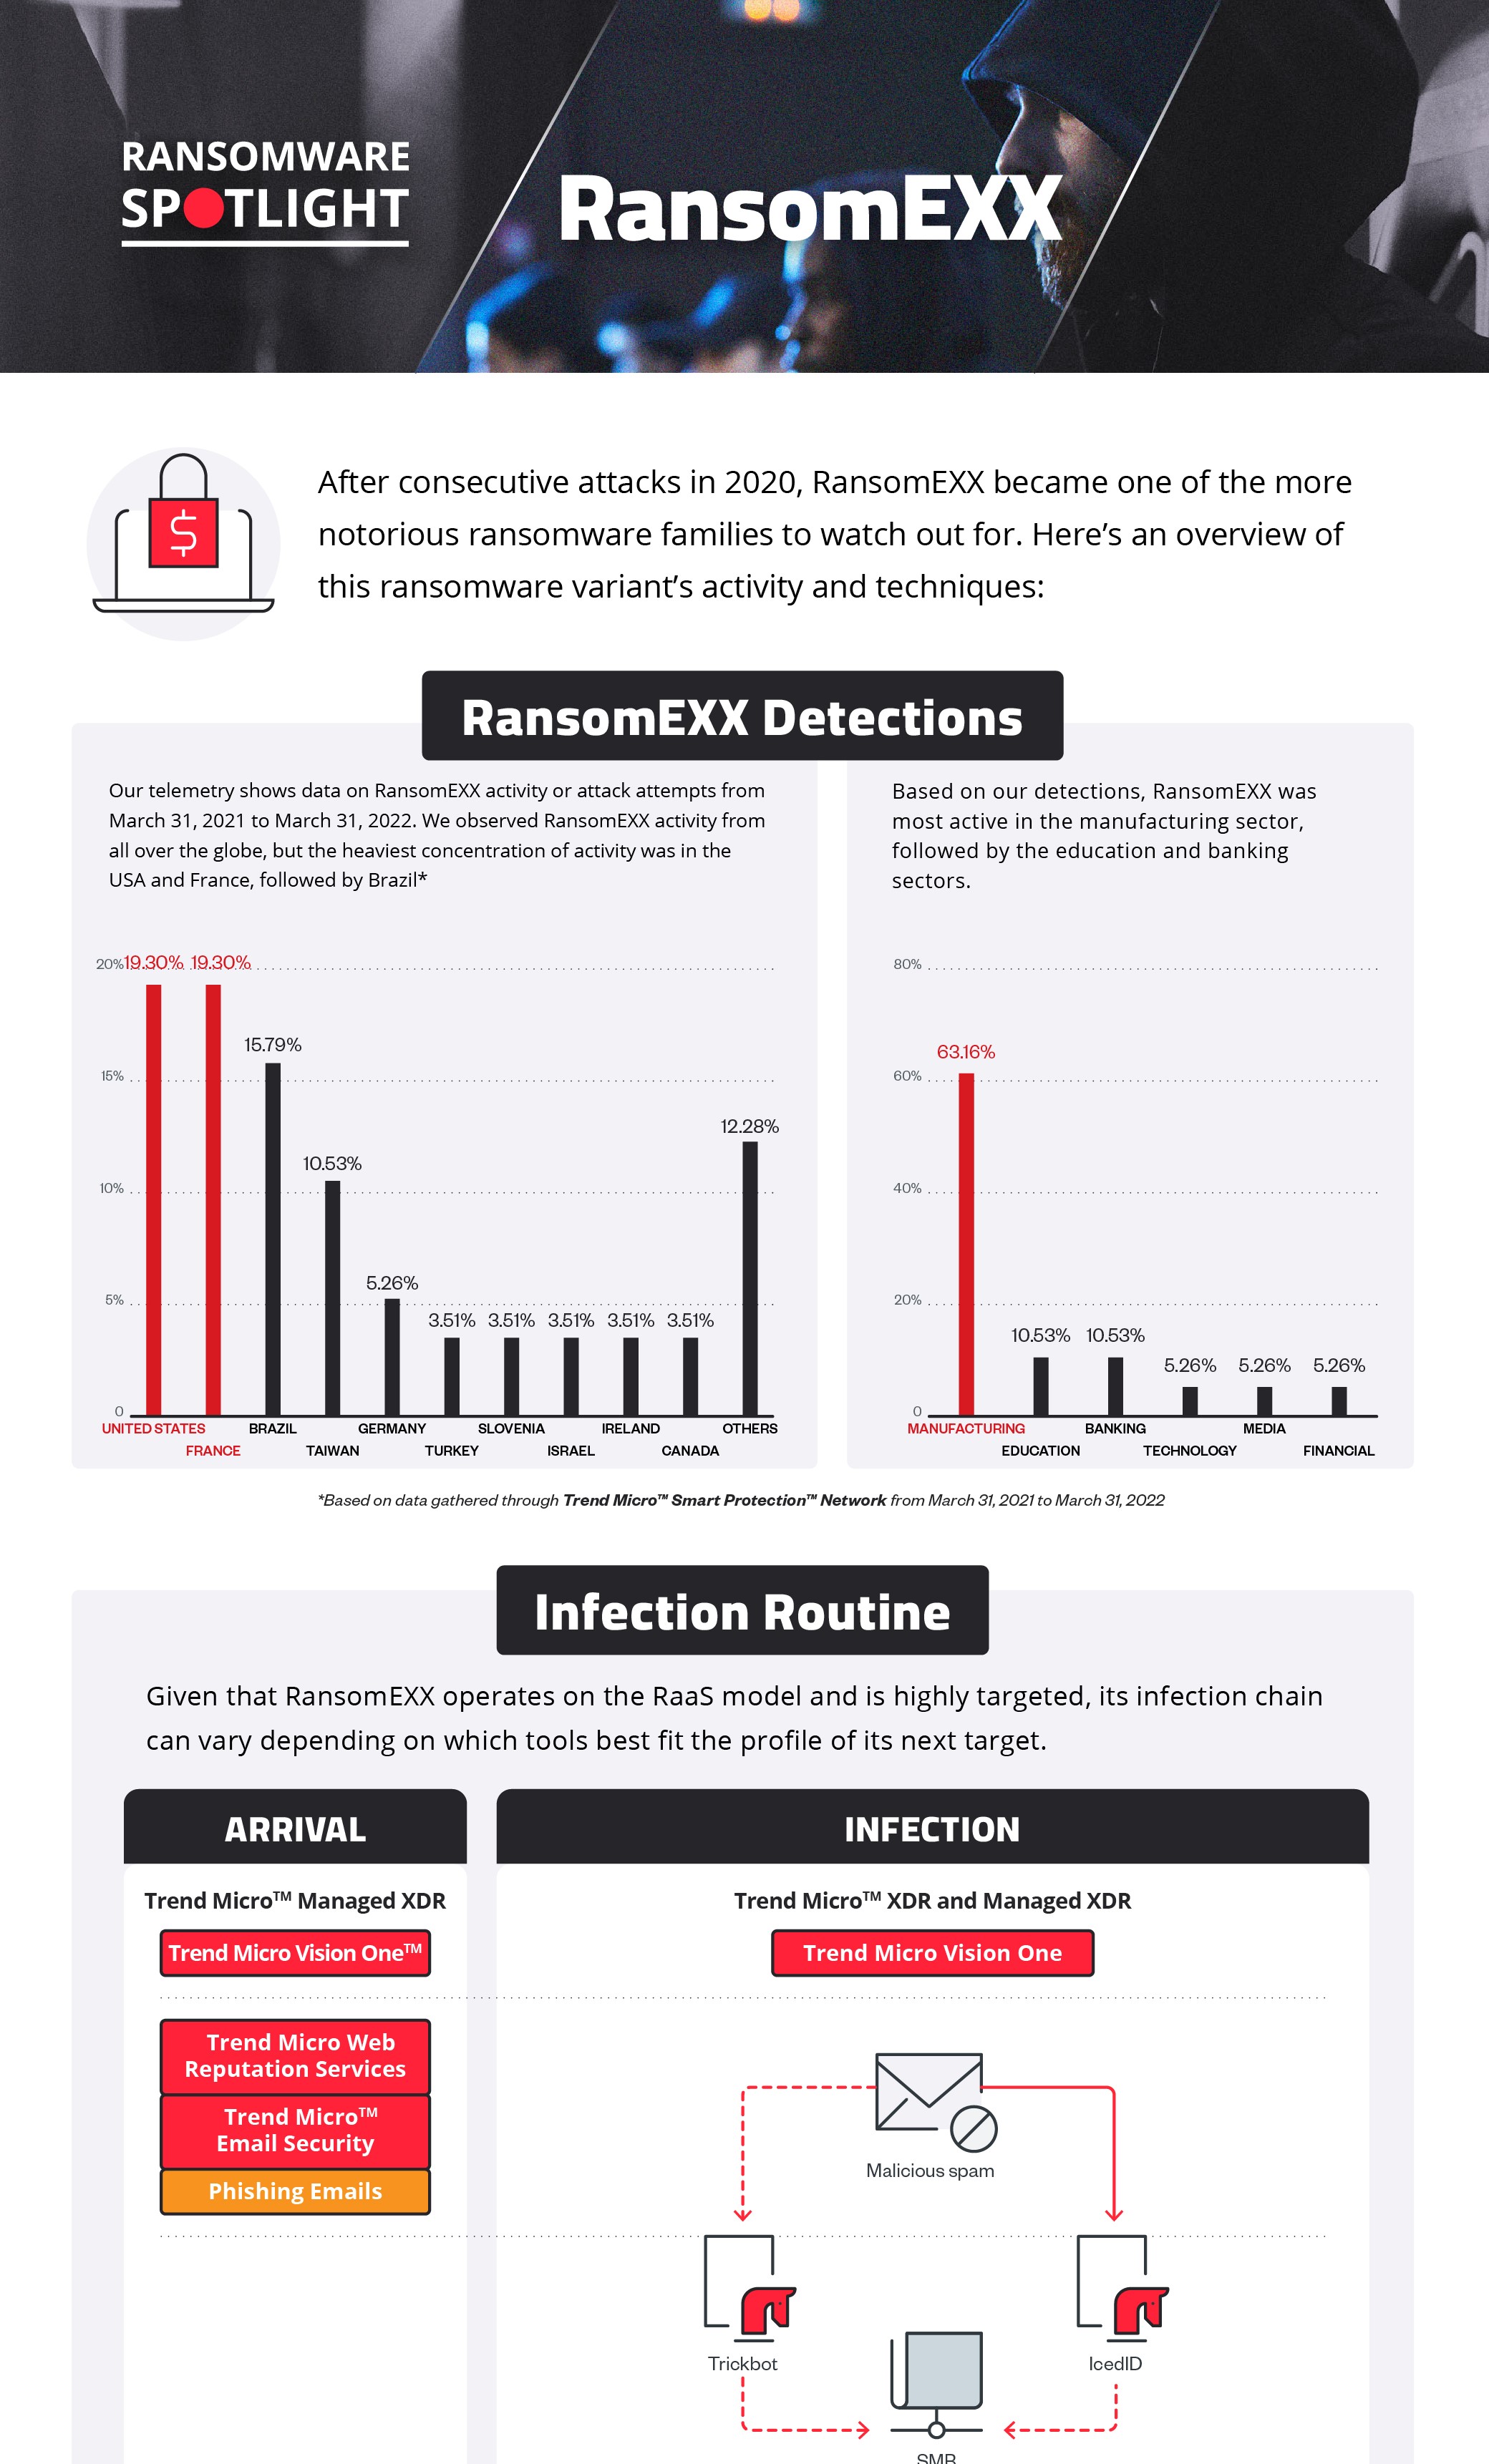 Ransomware Spotlight: RansomExx Infographic